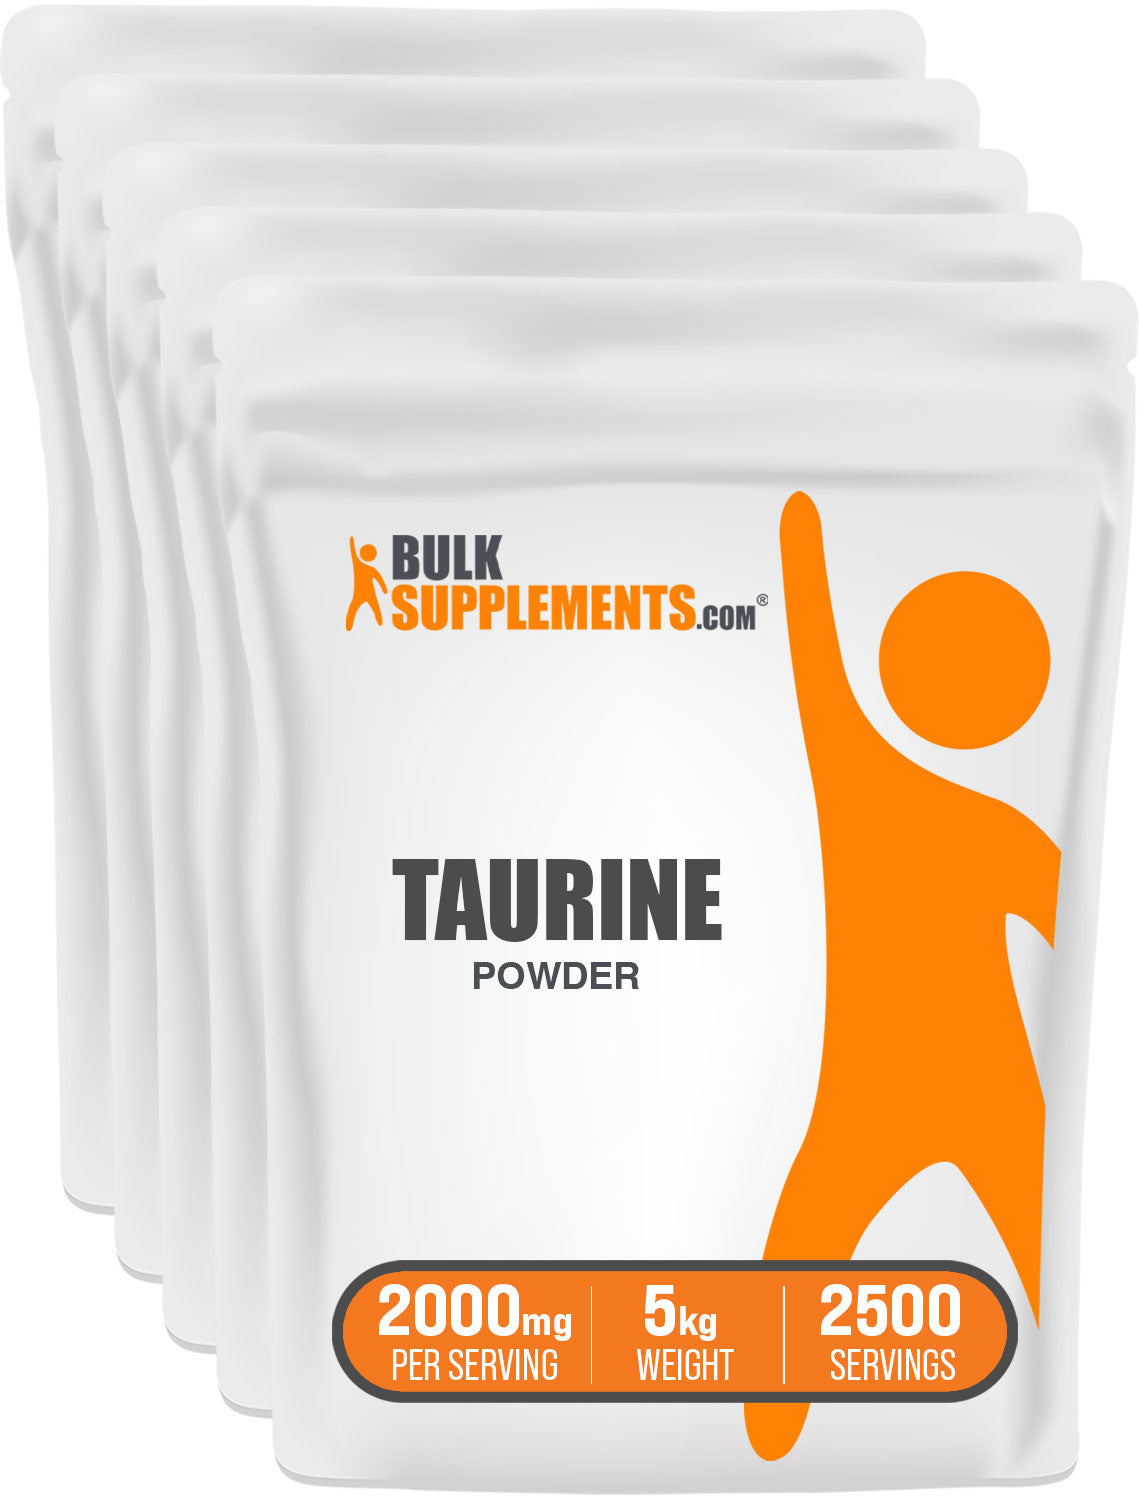 BulkSupplements.com Taurine Powder 5kg bag 